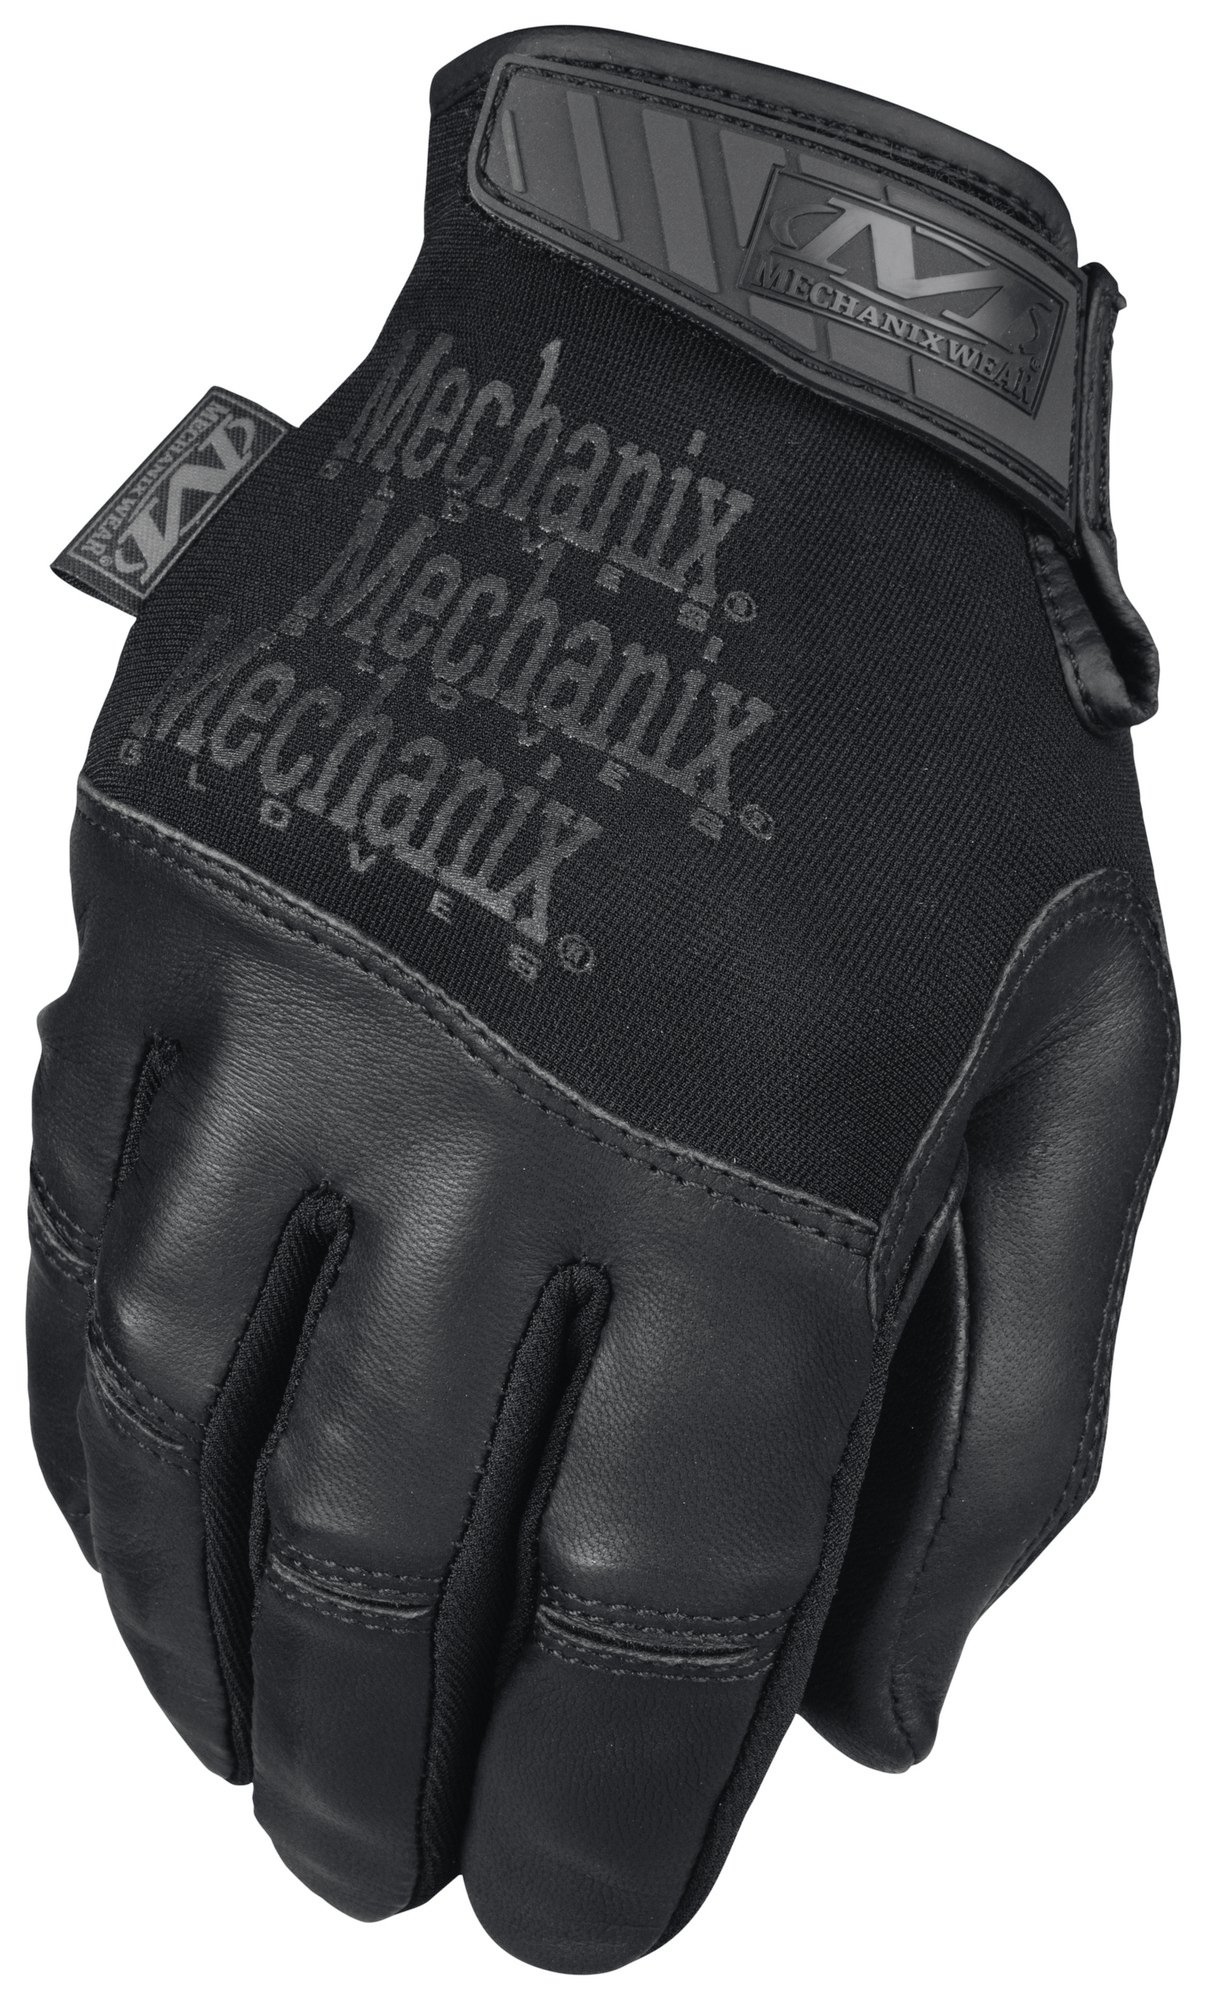 MECHANIX rukavice Recon - Covert - čierne S/8